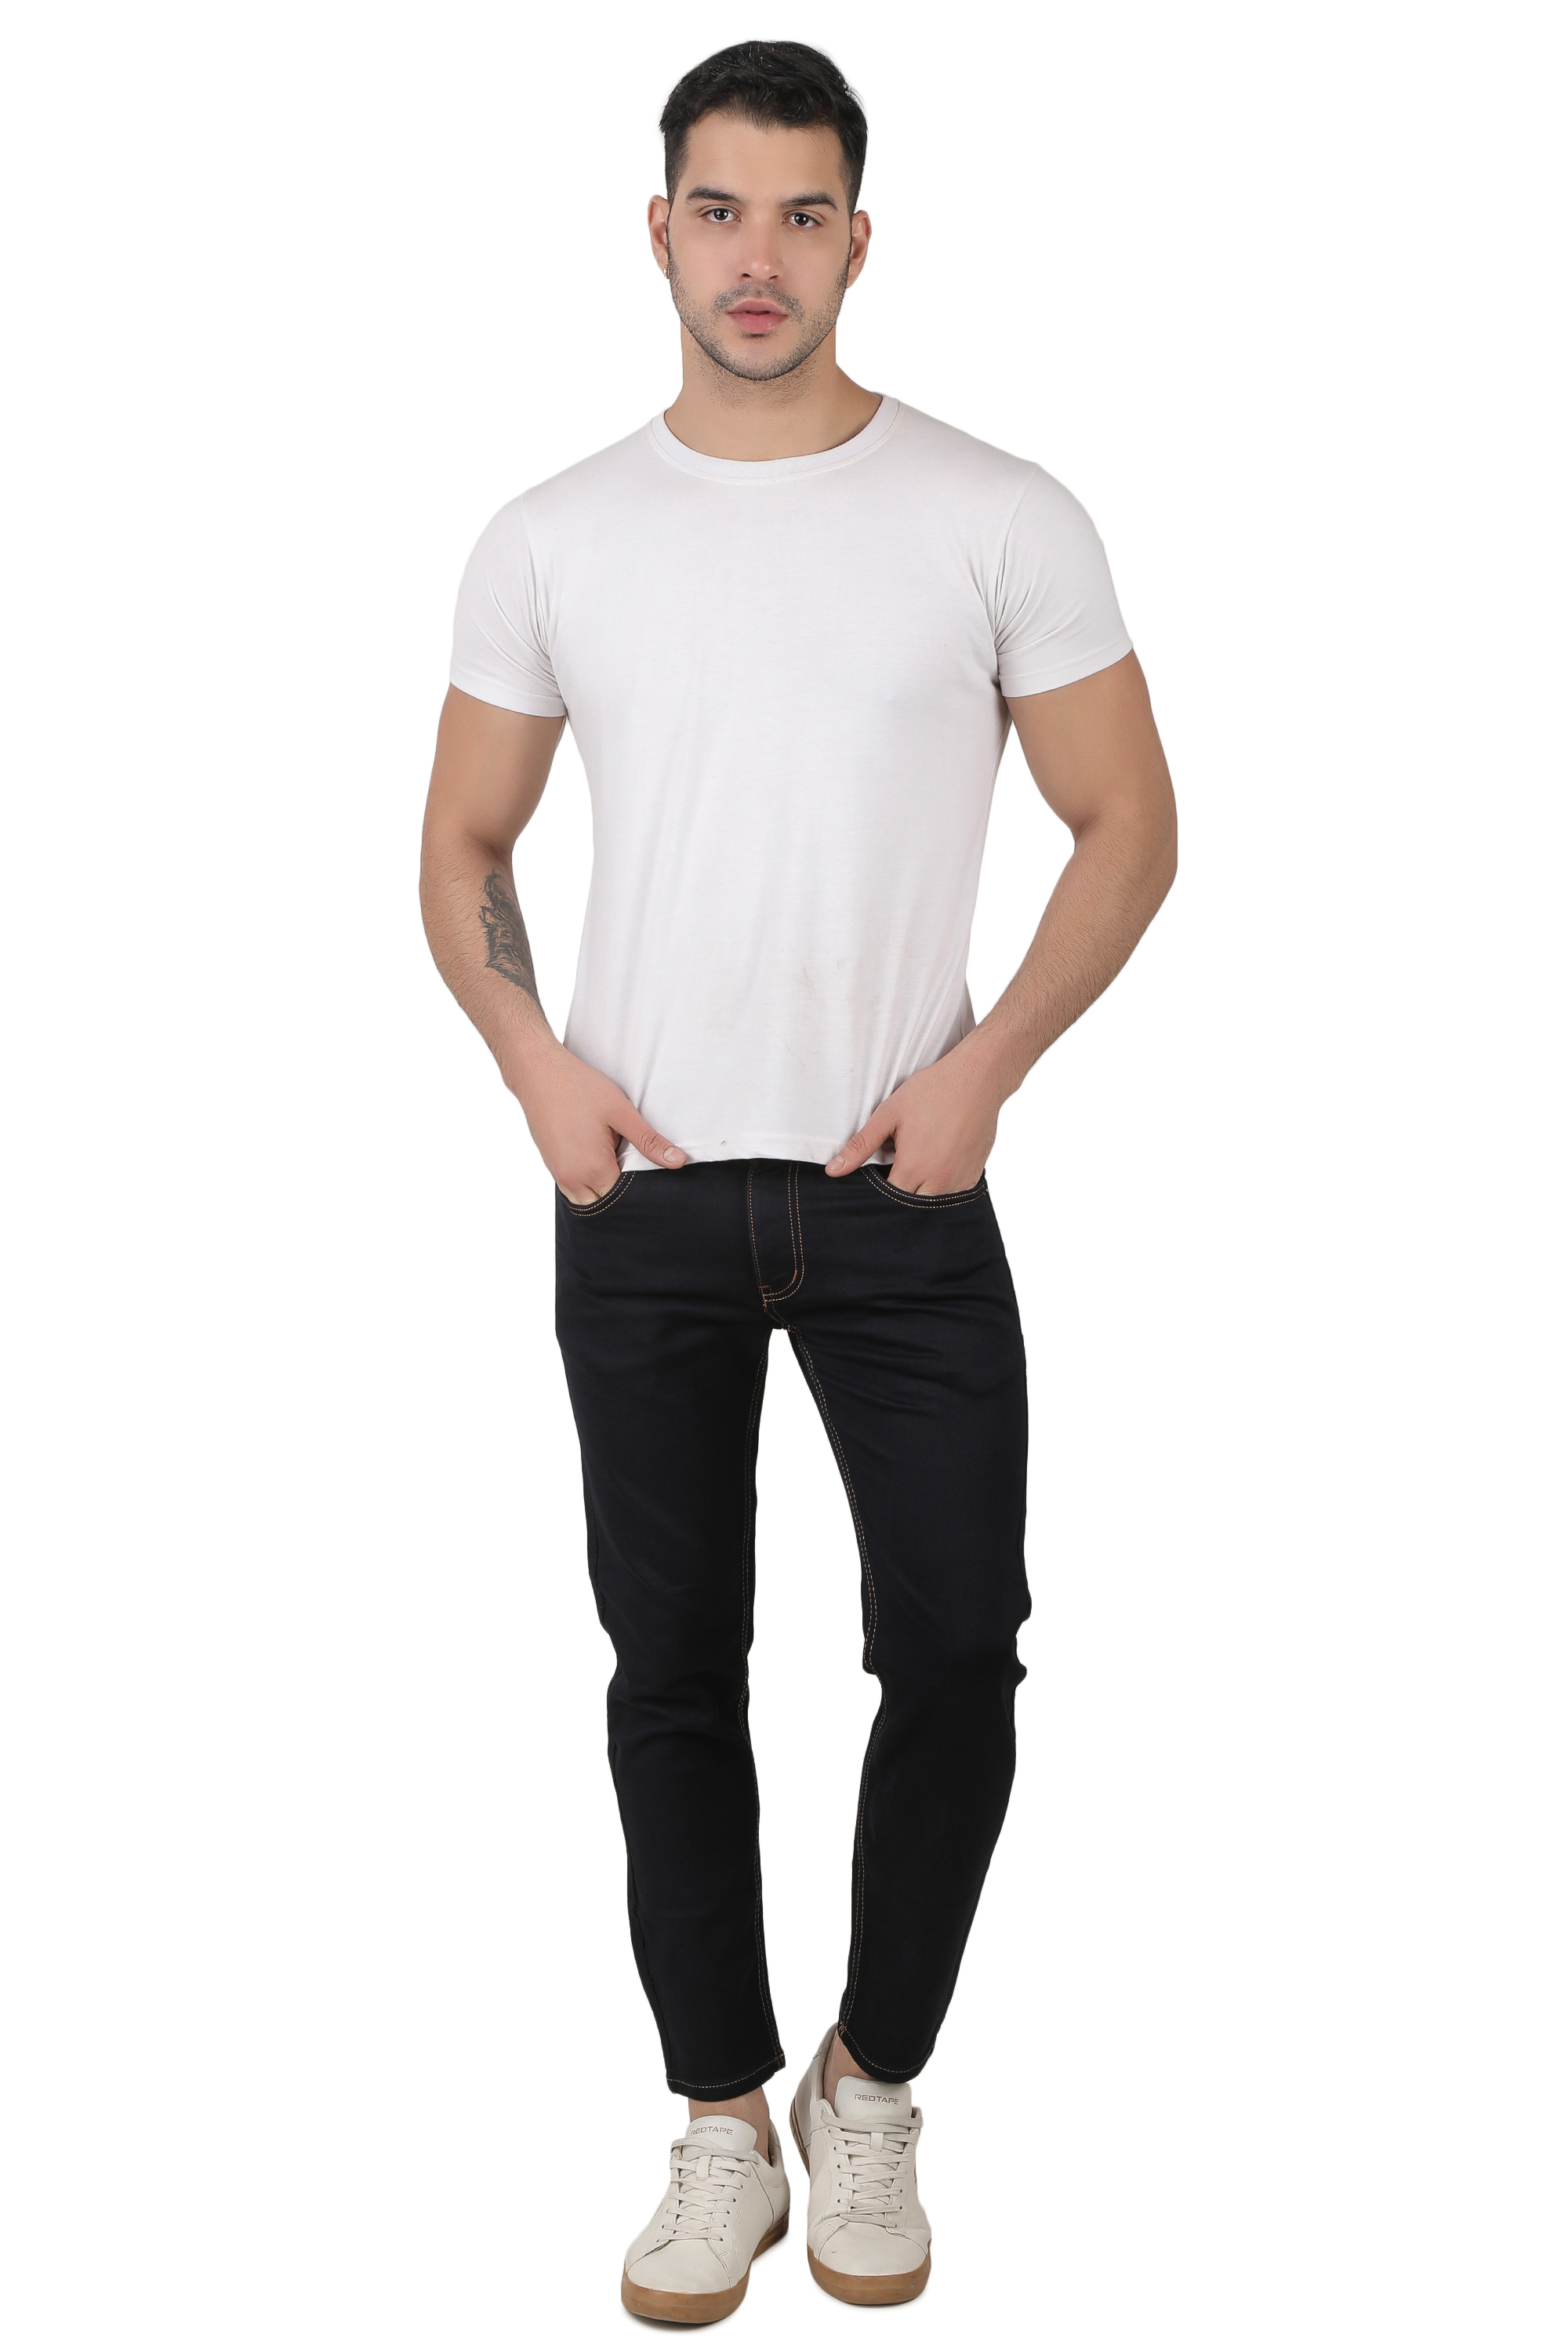 RAW WASH Denim Jeans Slim Fit - Sandiago